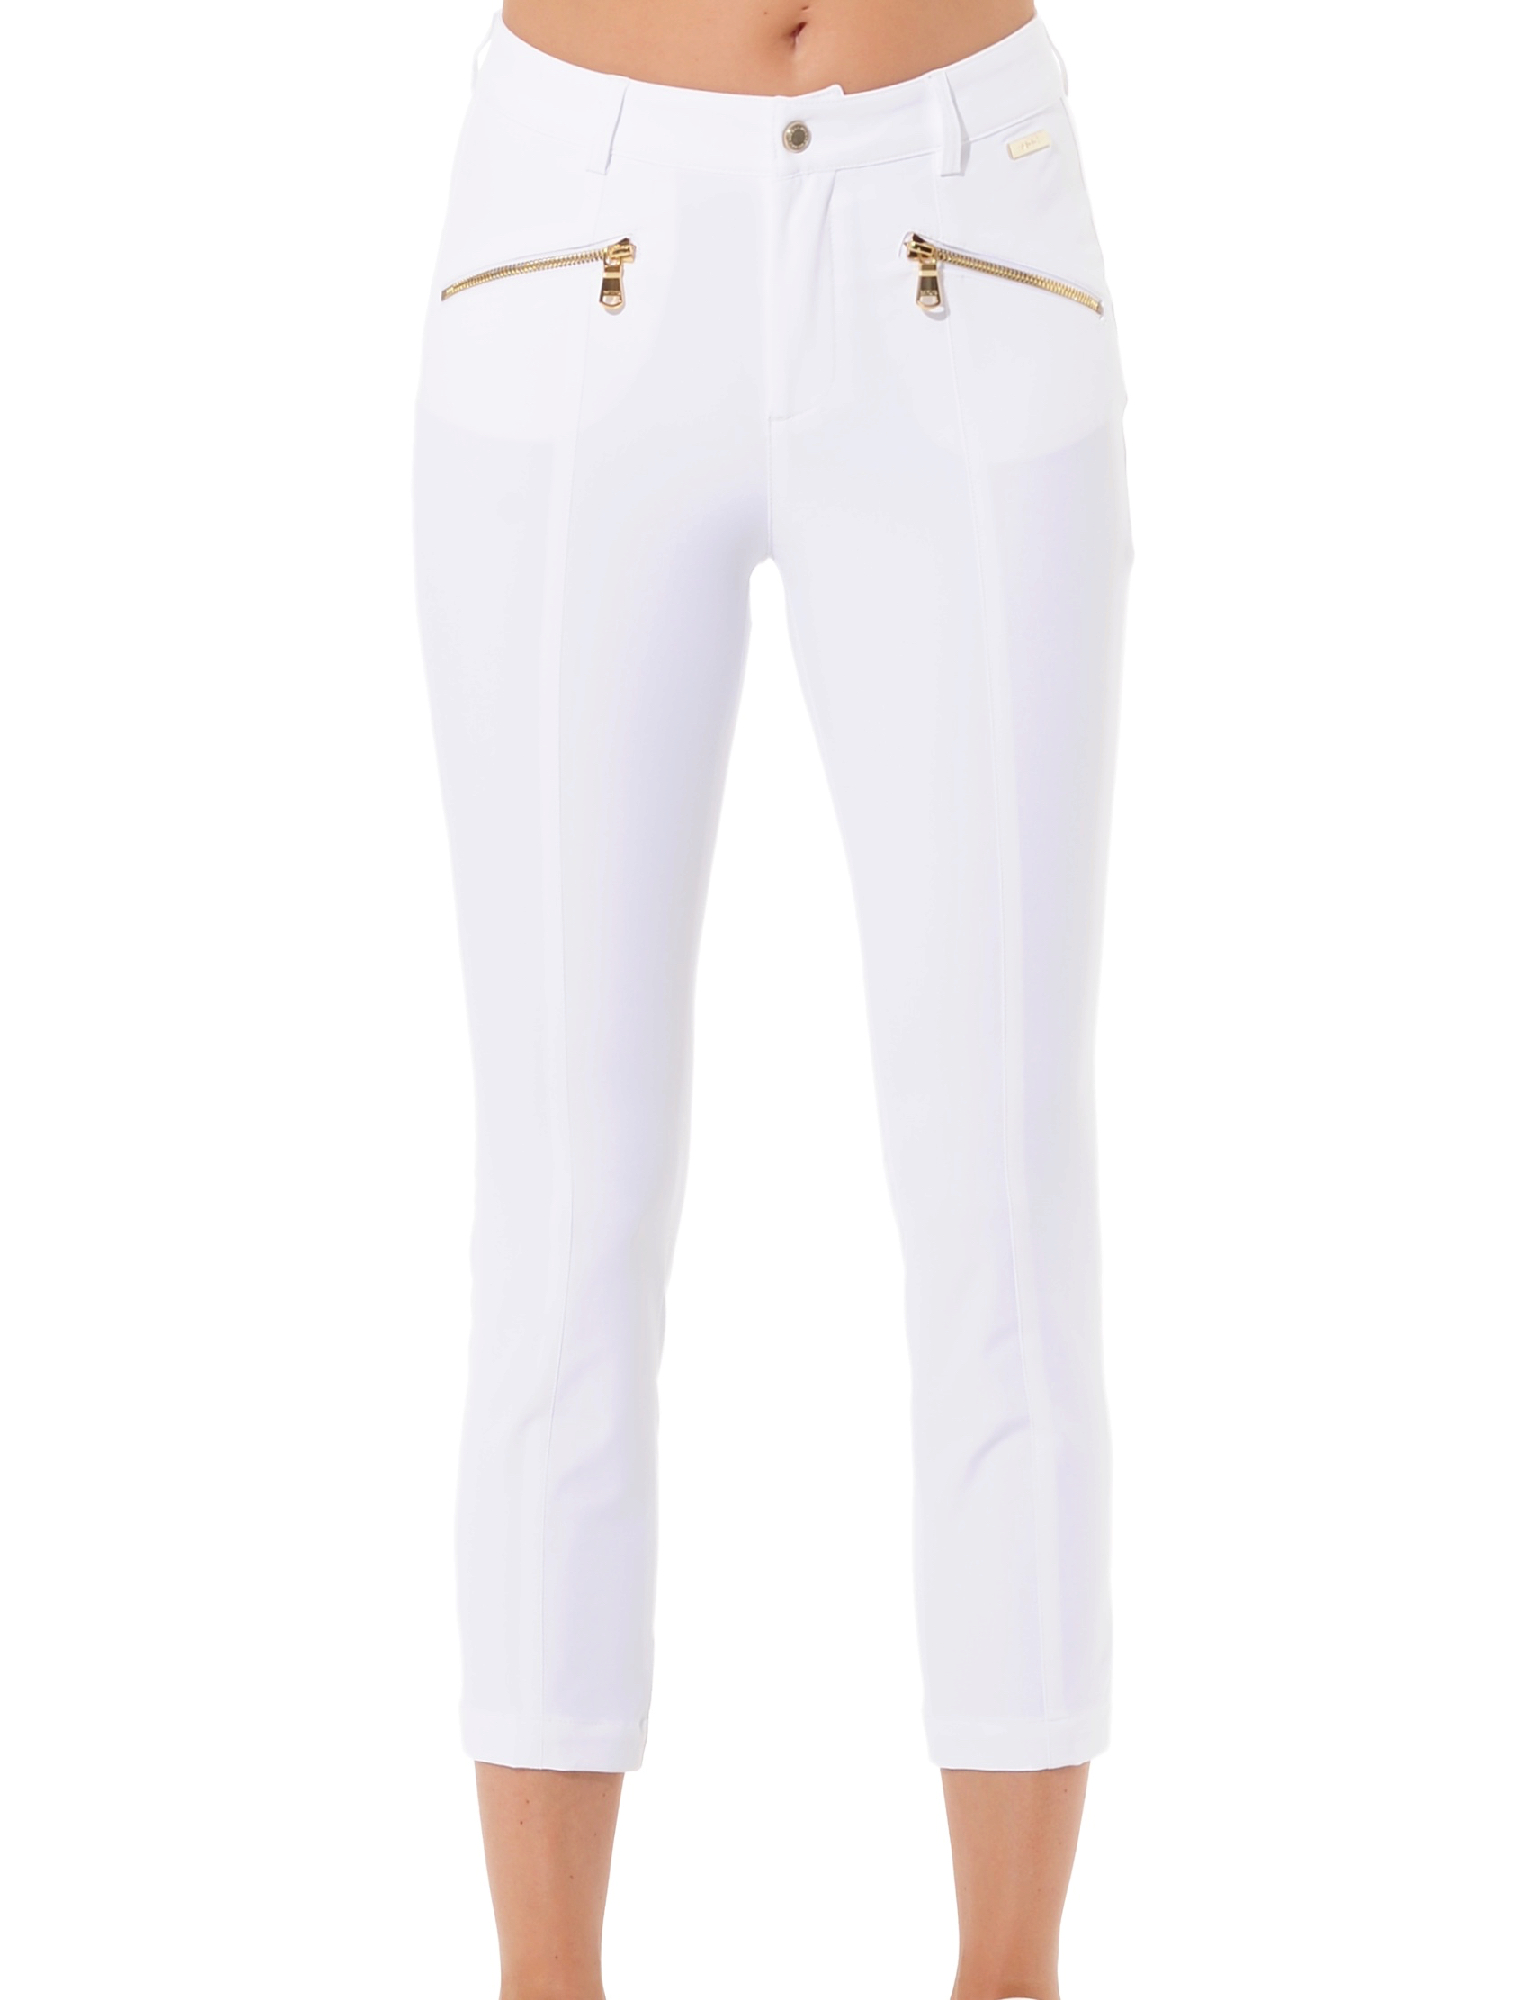 4way stretch shiny gold zip curvy cropped pants white 